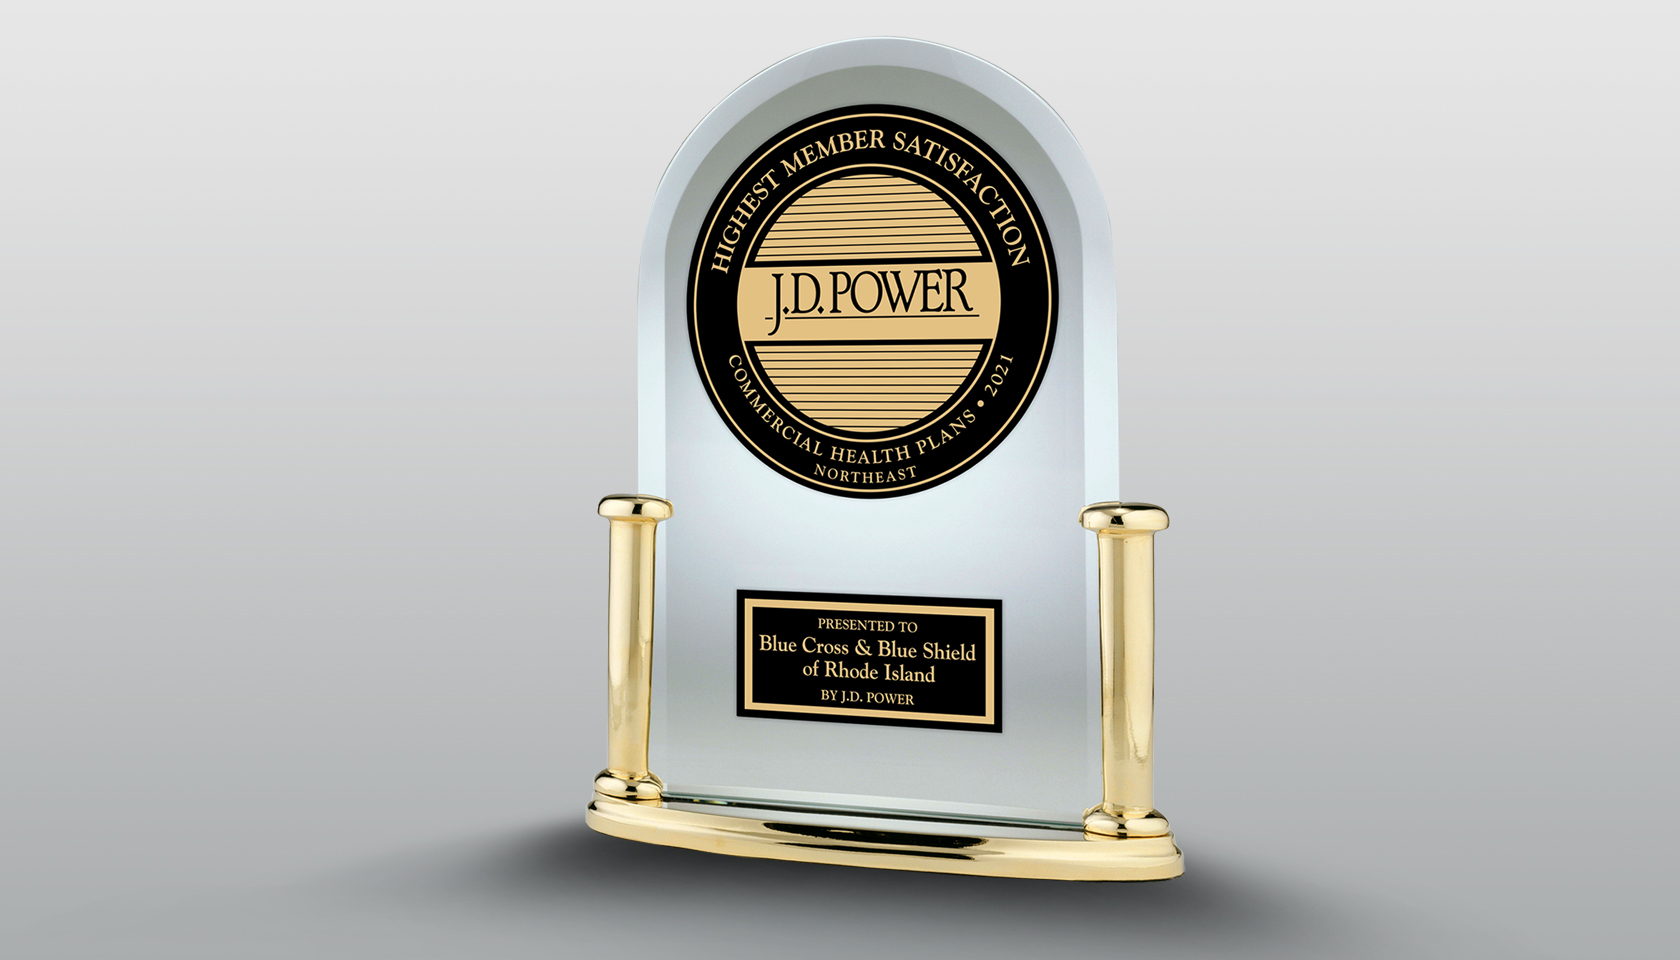 Photo of the J.D. Power Award